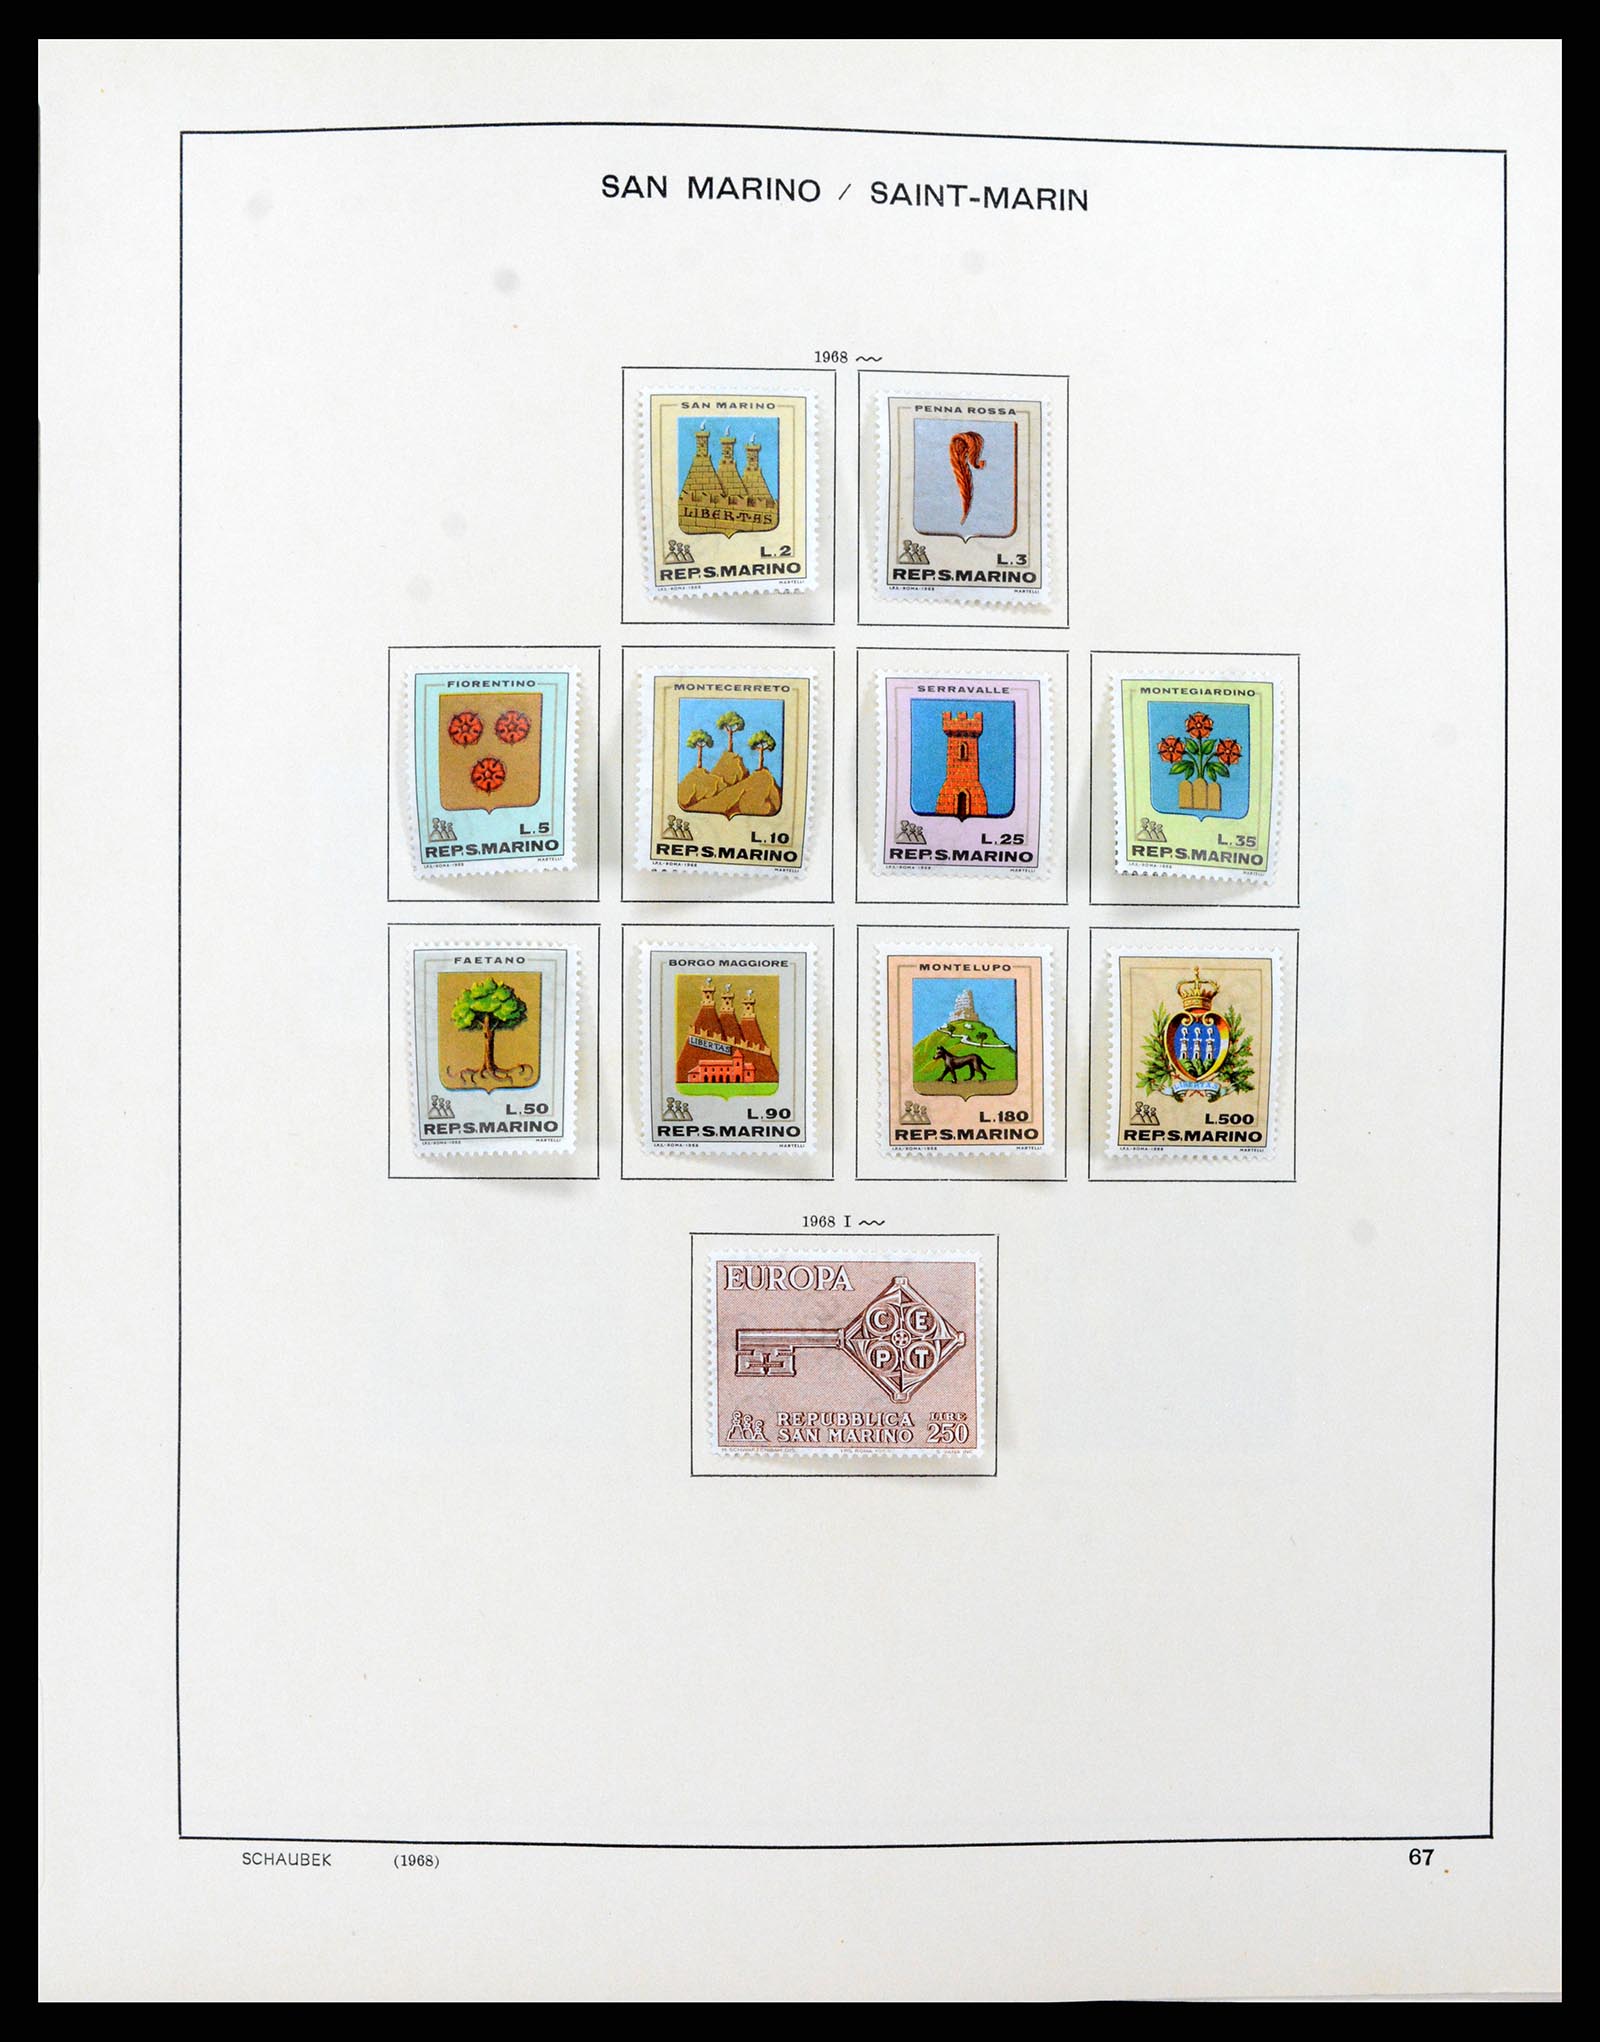 37556 070 - Stamp collection 37556 San Marino 1877-2017.